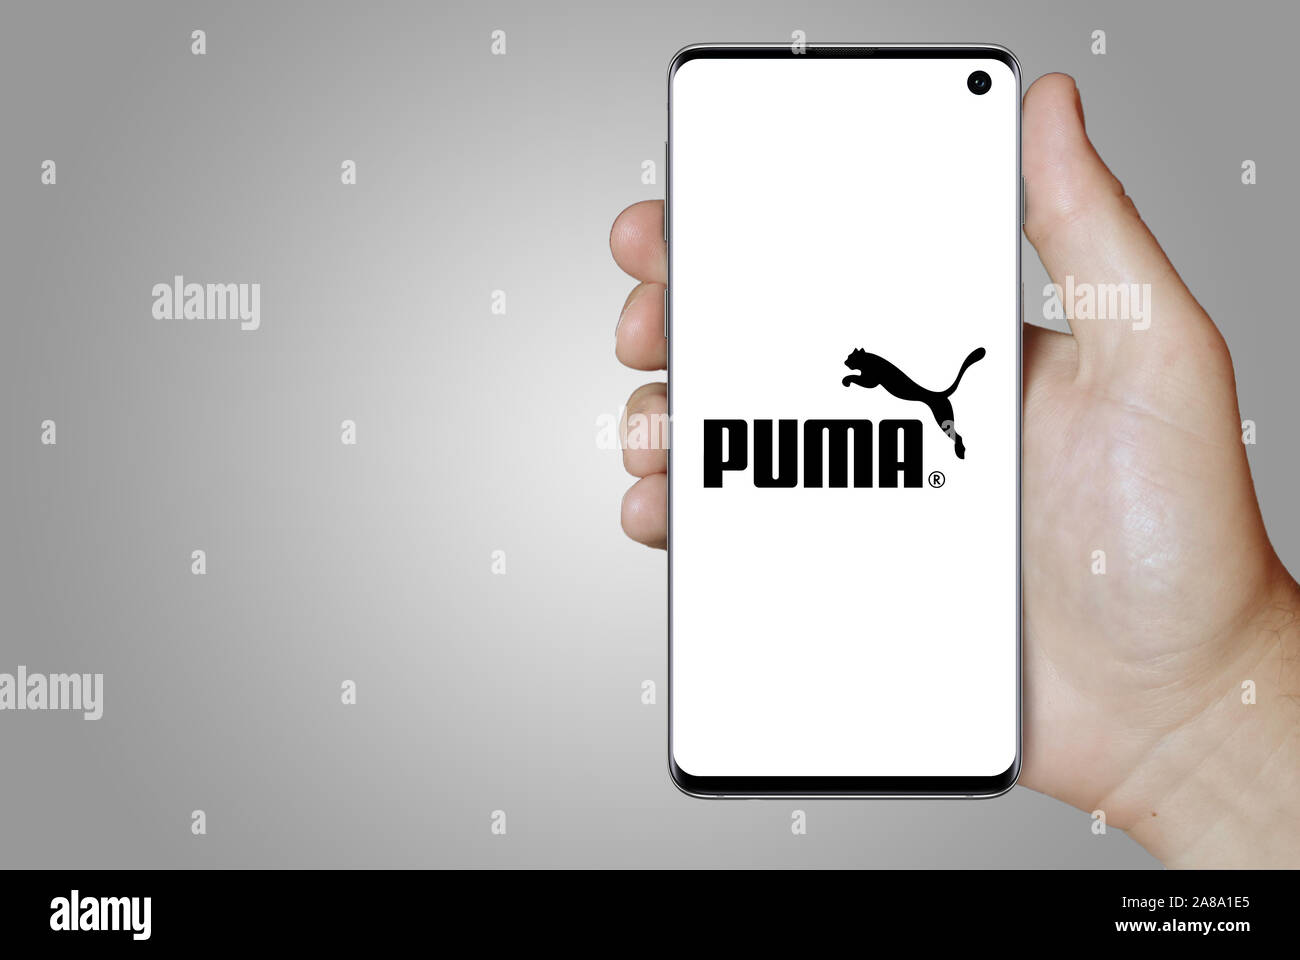 is puma a public company